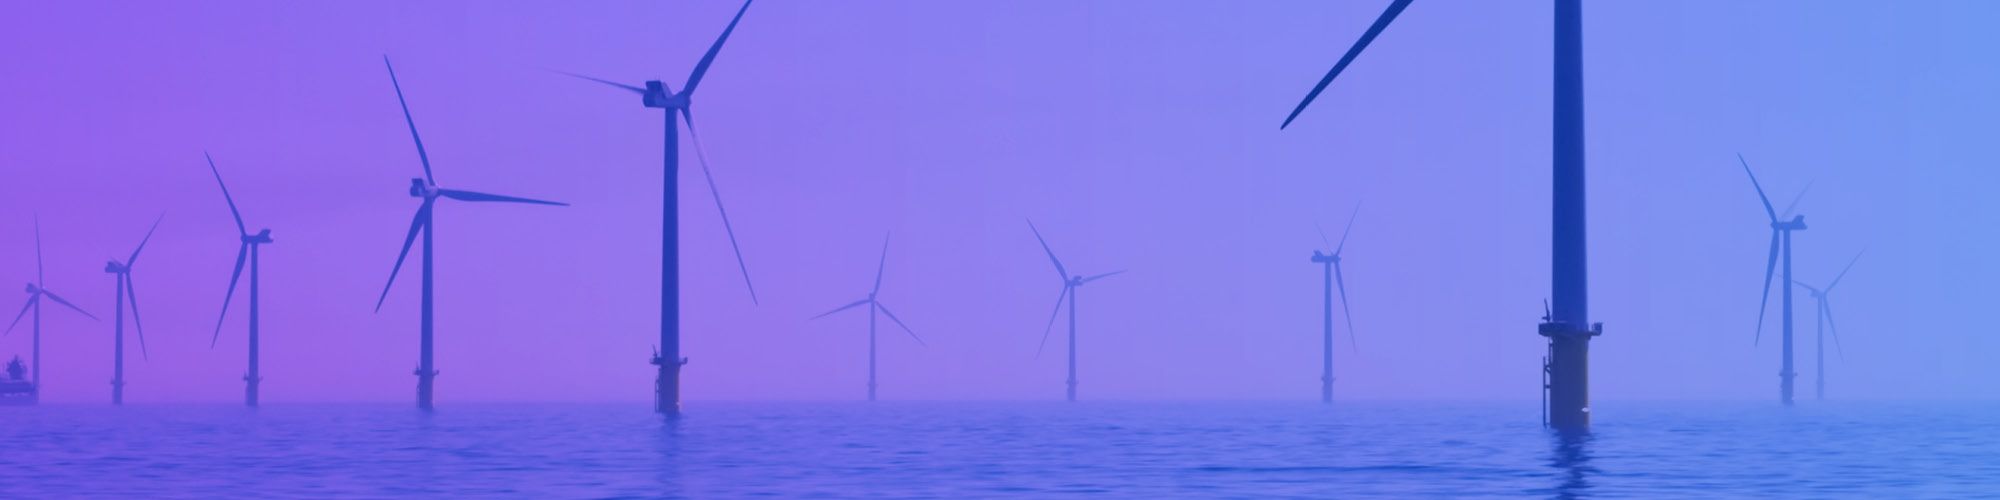 Wind turbines on water